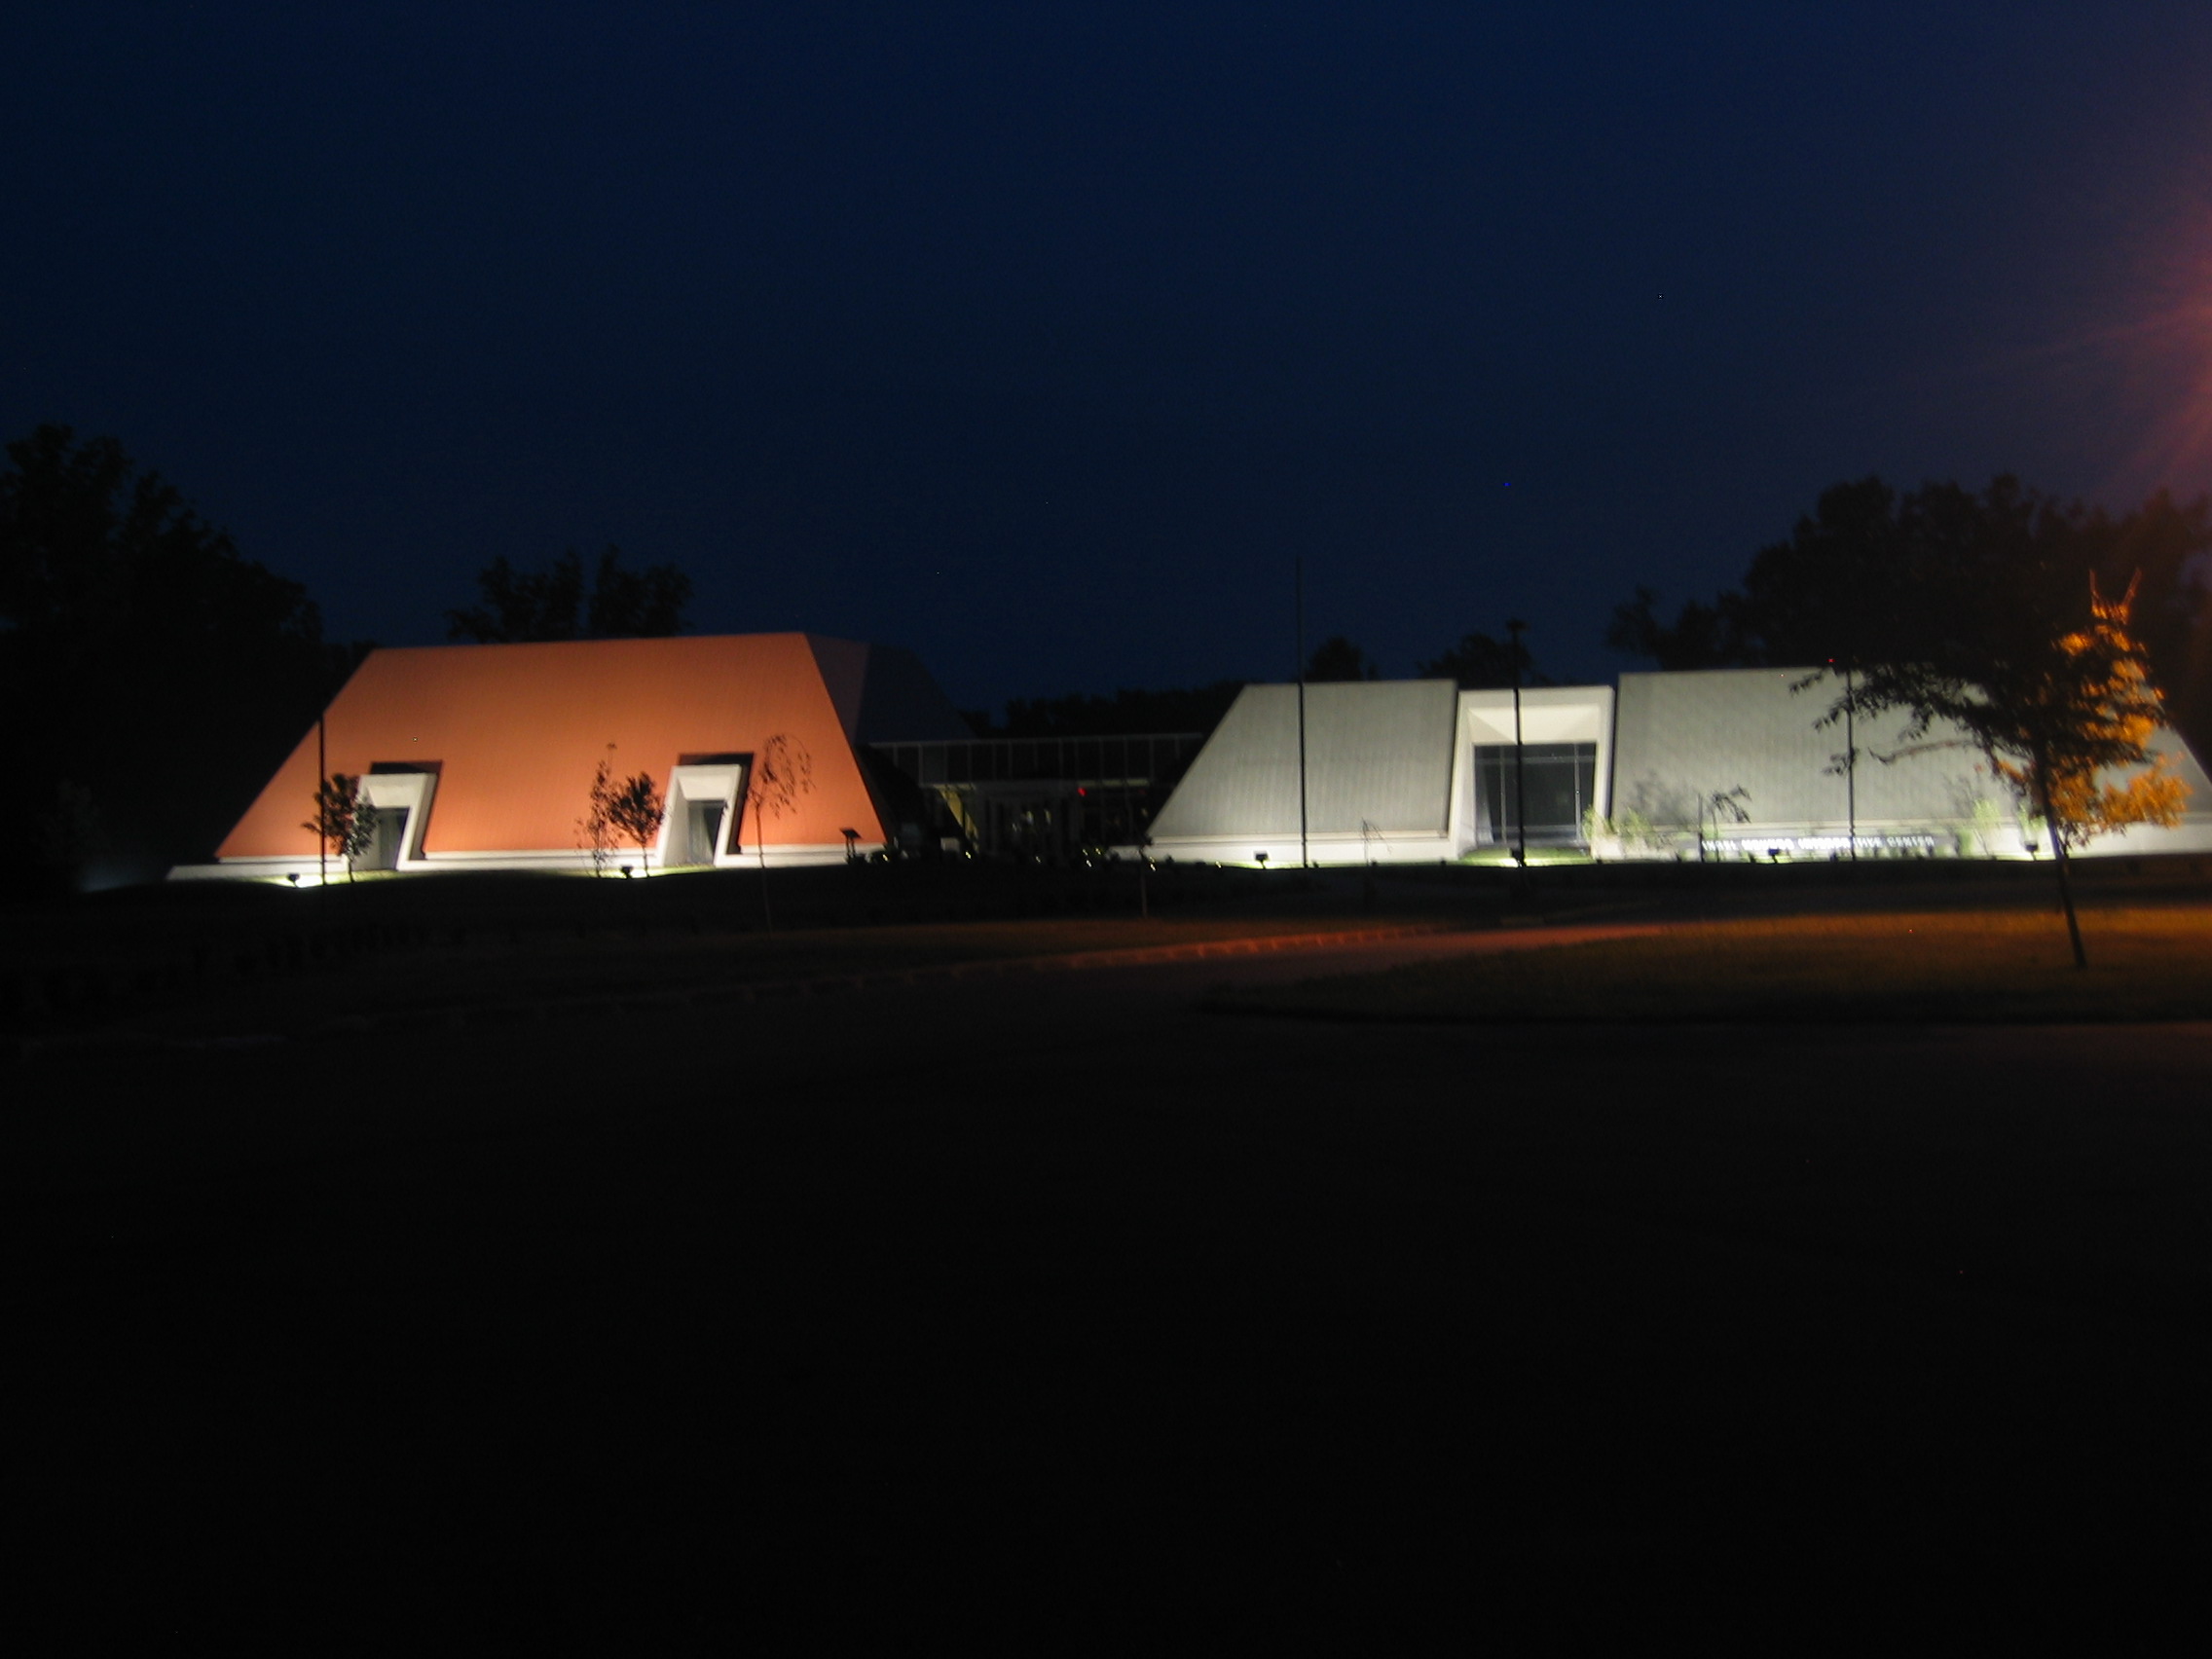 Angel Mounds vistor center at night